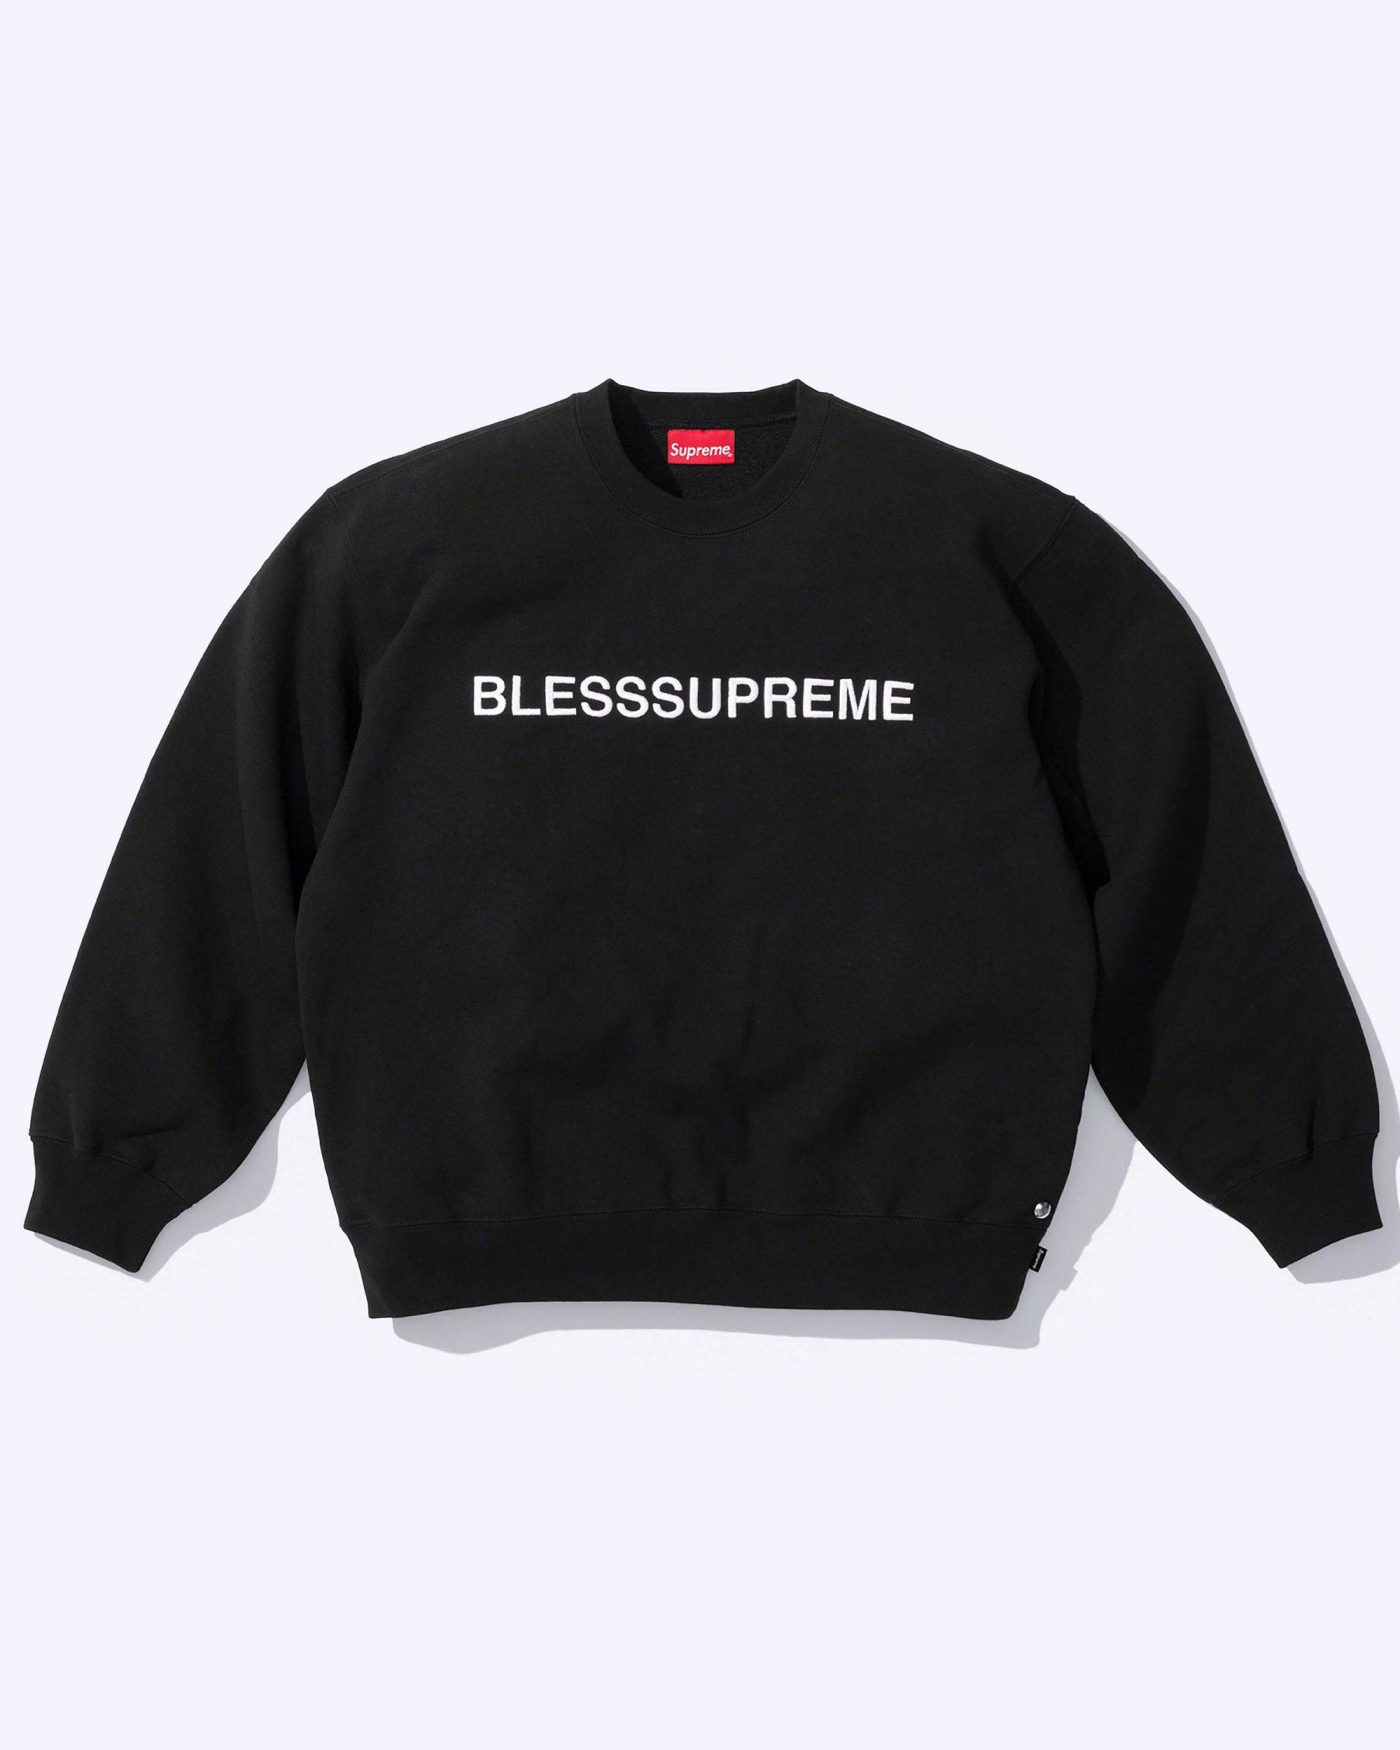 Supreme®/BLESS (22/28)